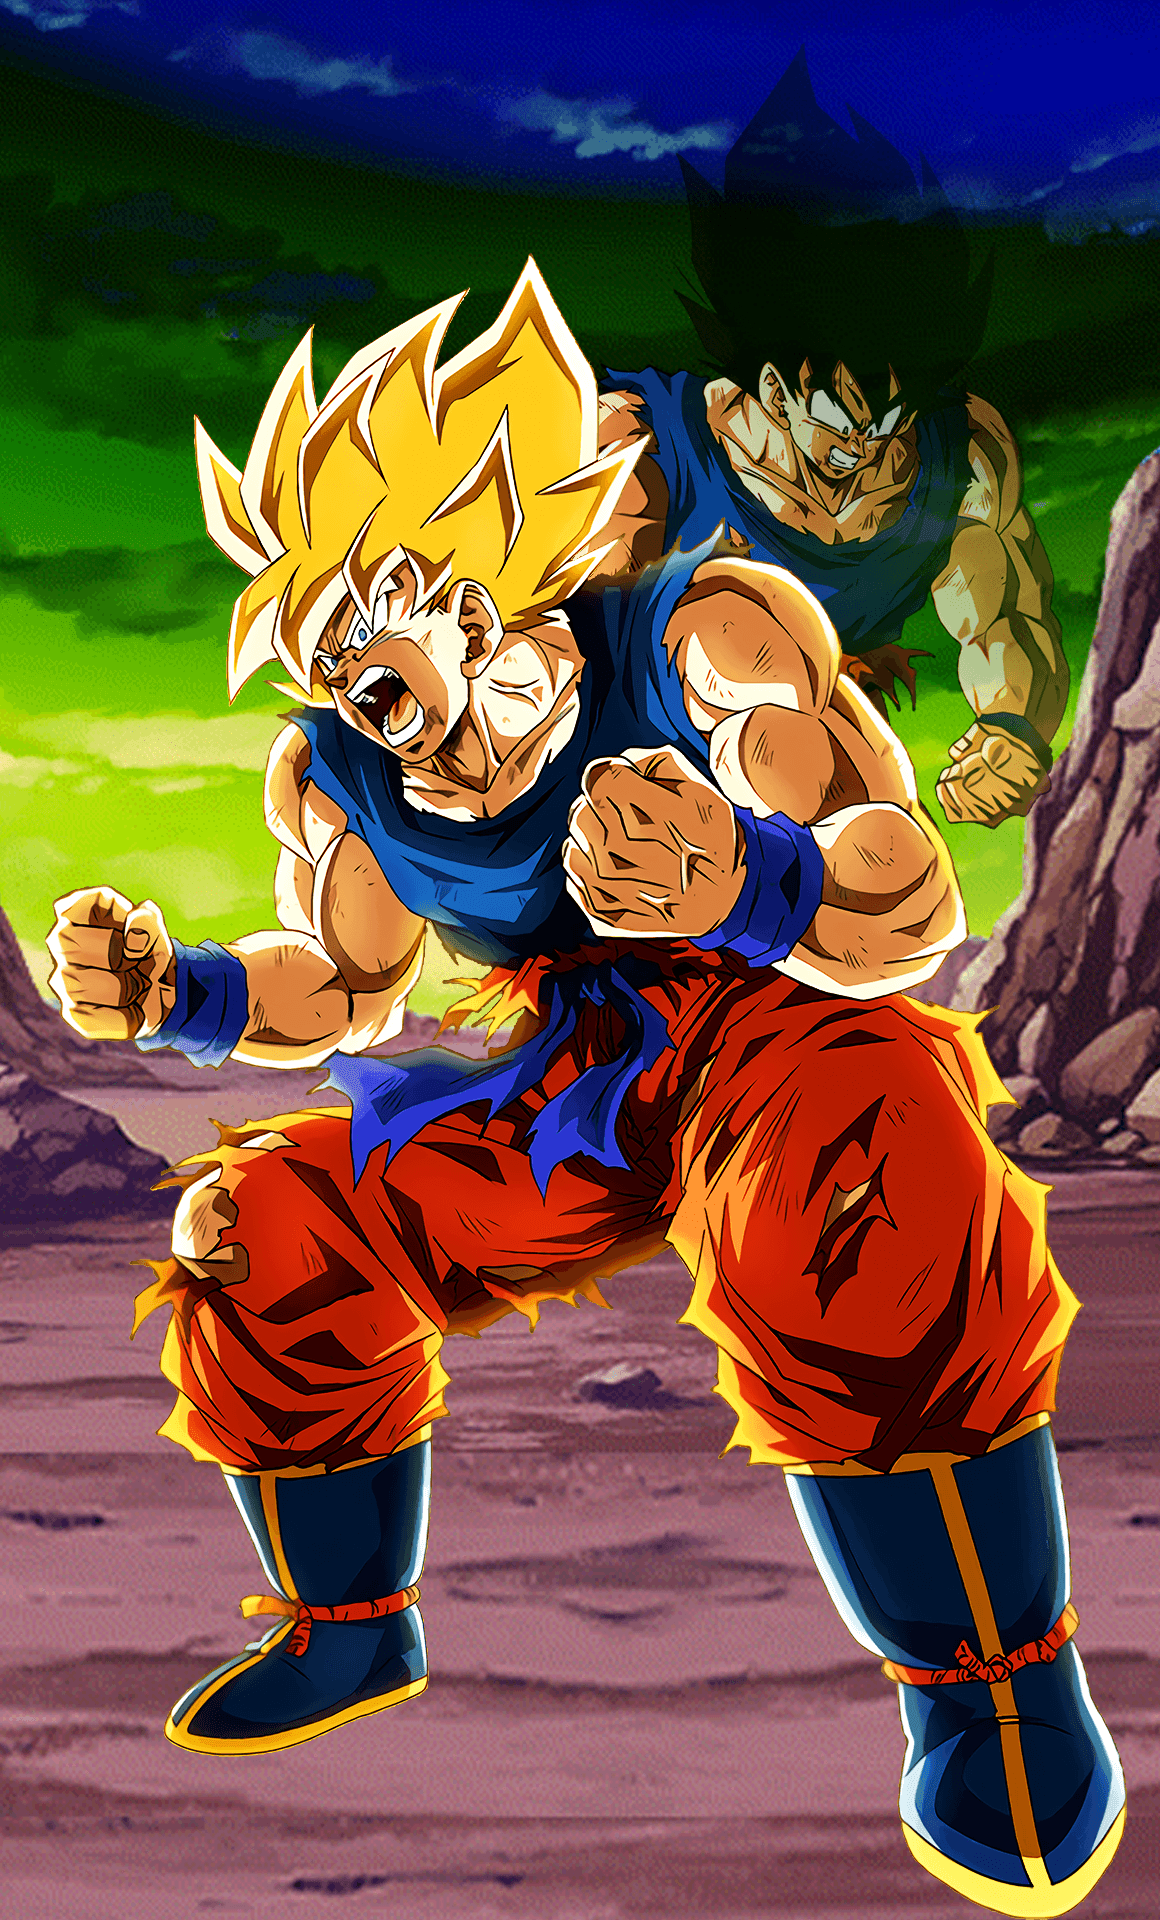 SSJ Goku HD Wallpaper! More versions and HD download below!